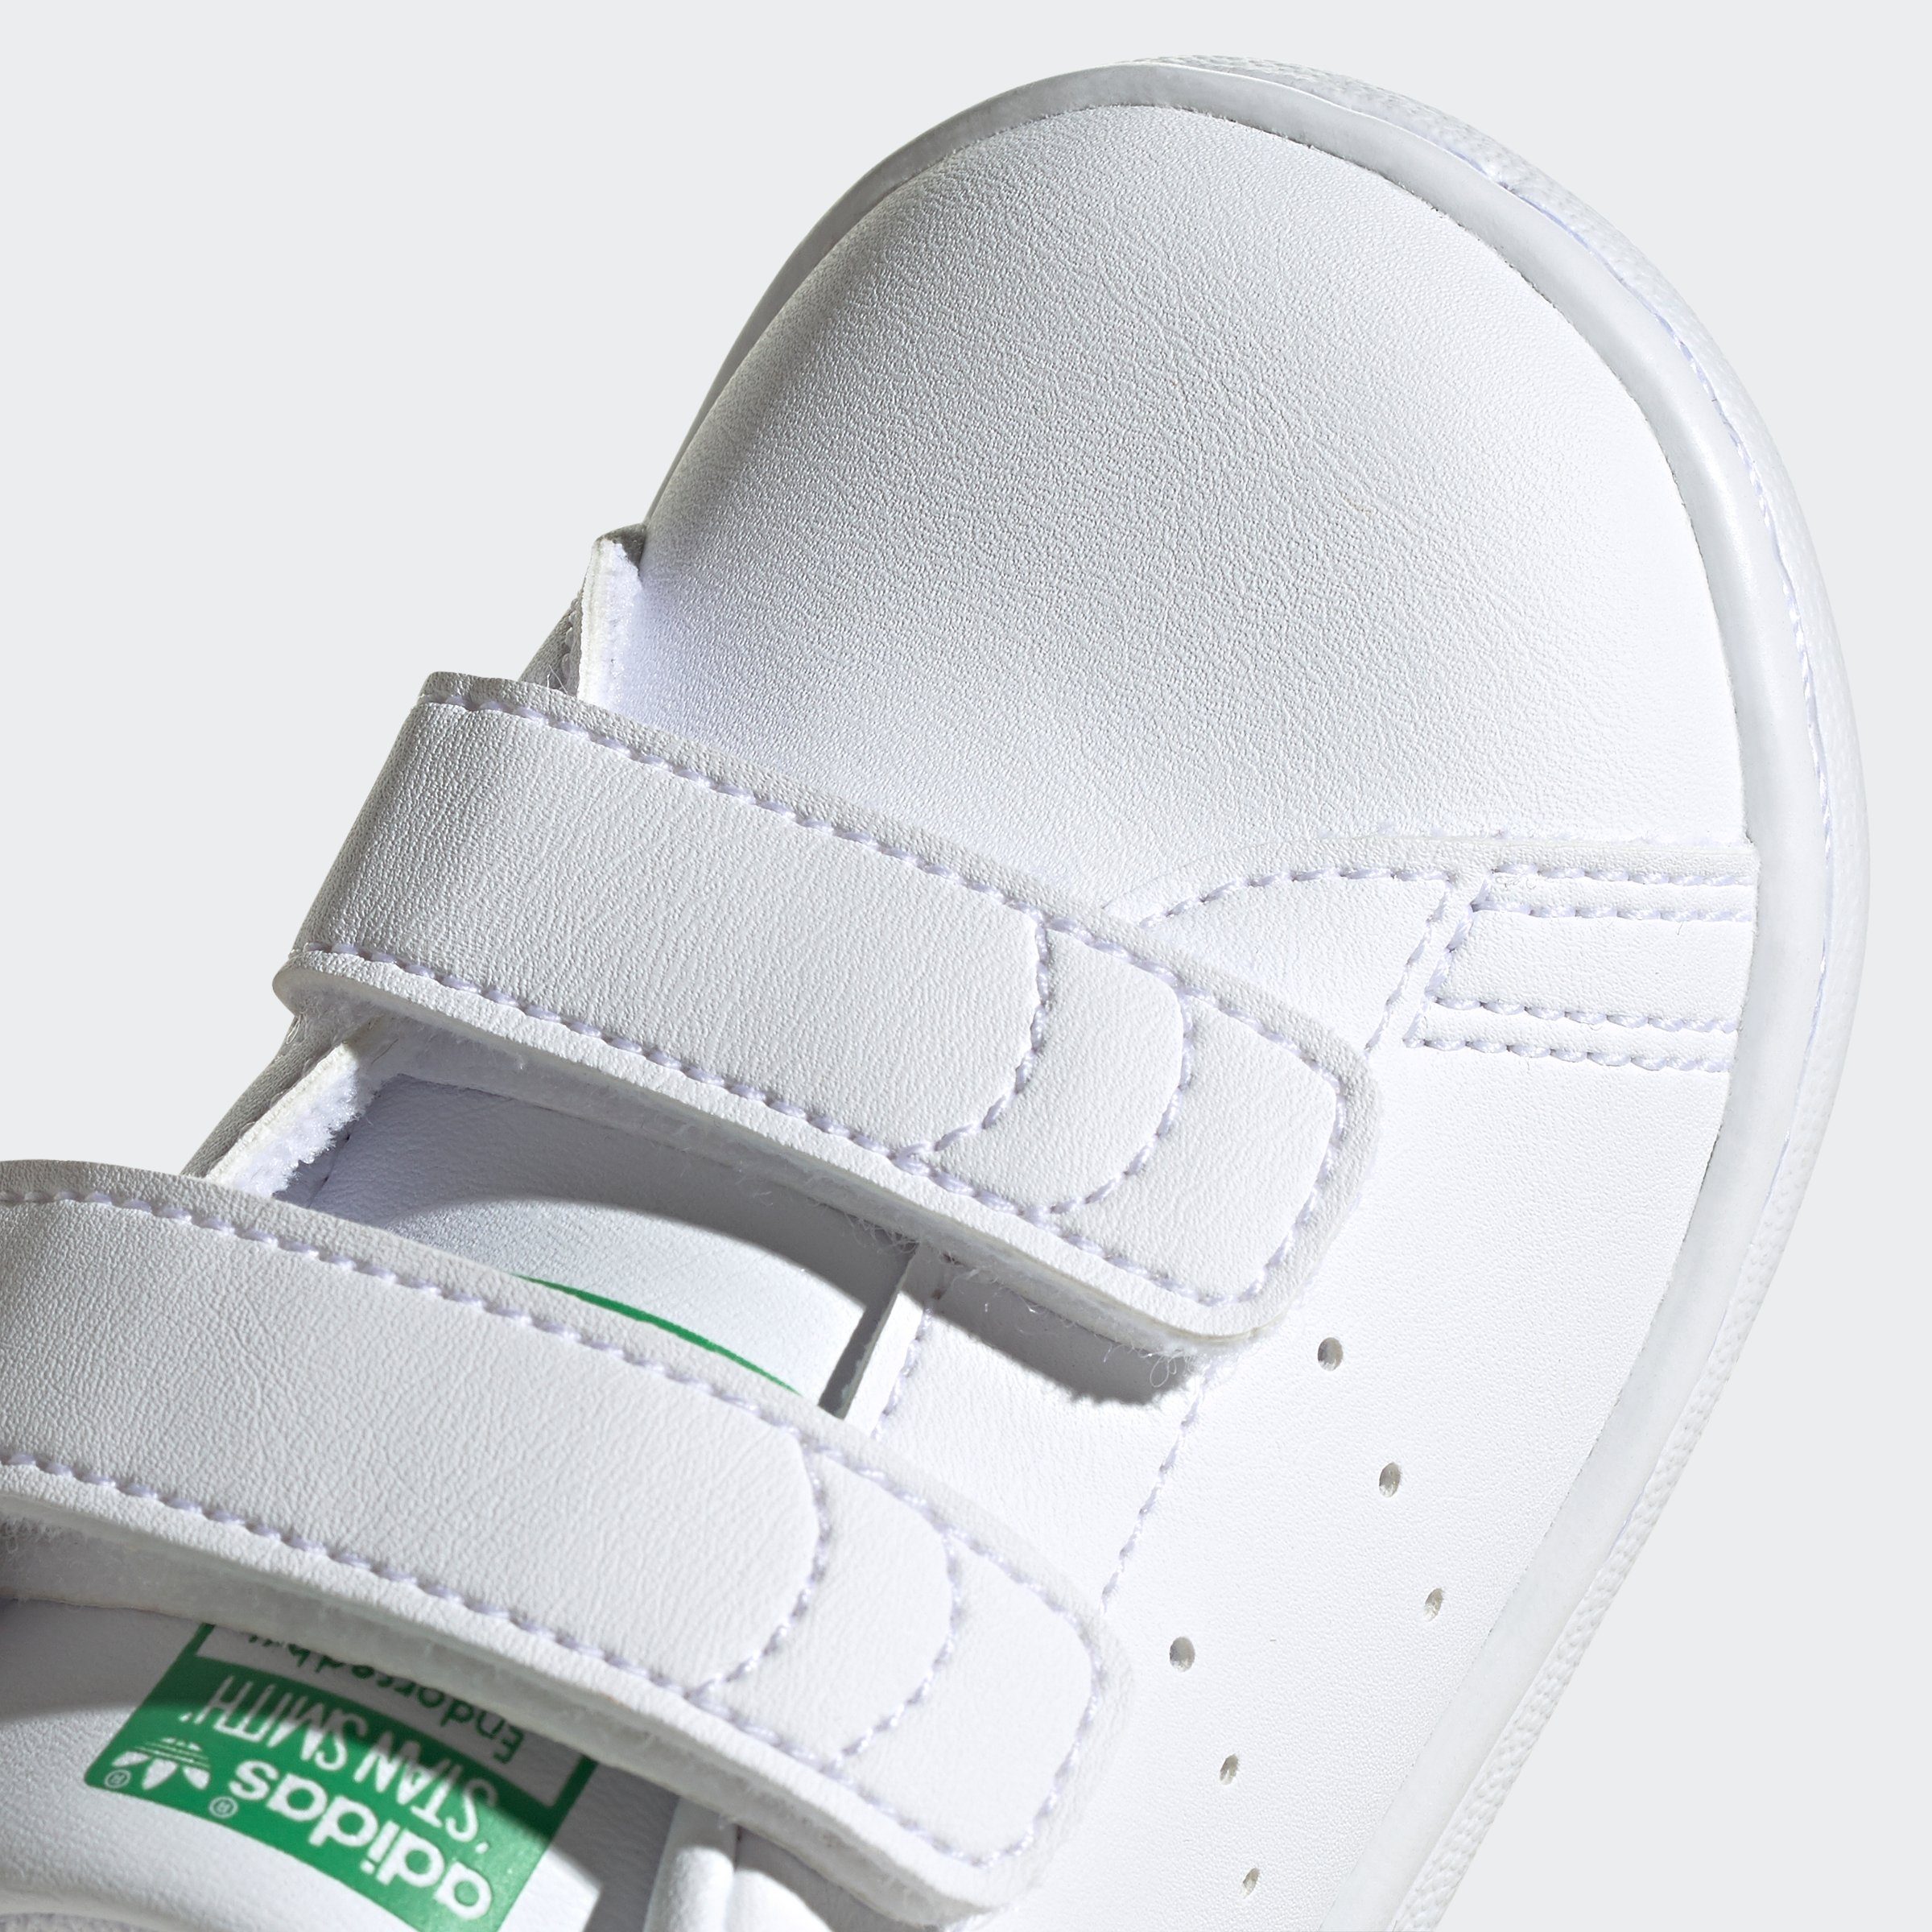 Sneaker White Originals White adidas SMITH Cloud Cloud / / STAN Green